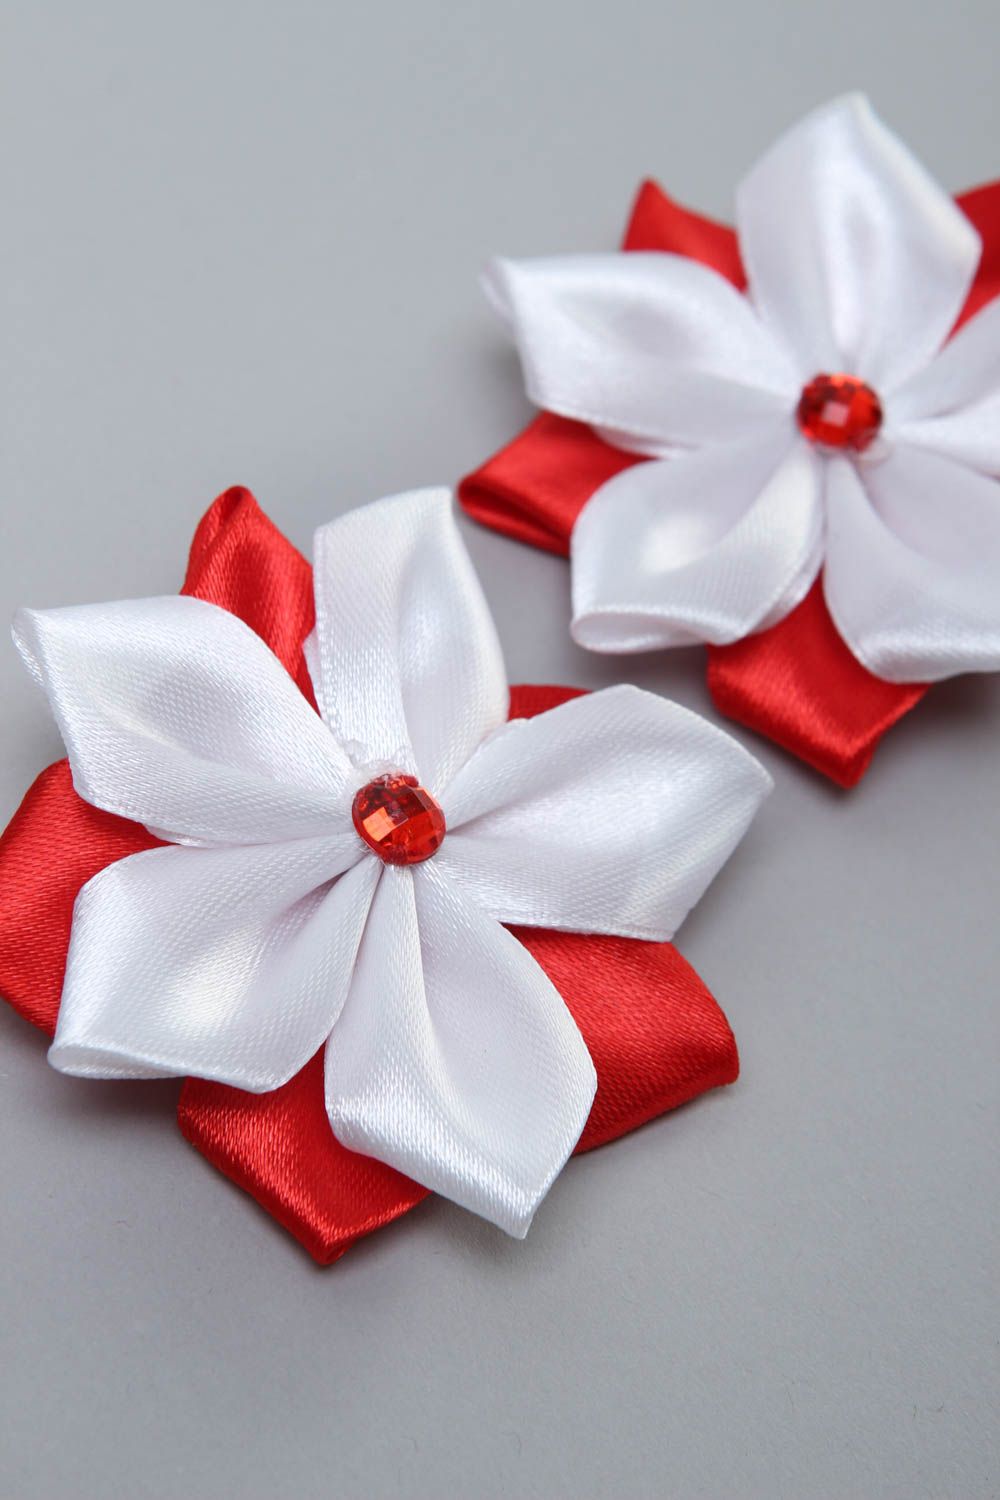 Handmade hair accessories kanzashi flowers hair clips gift ideas for women photo 3